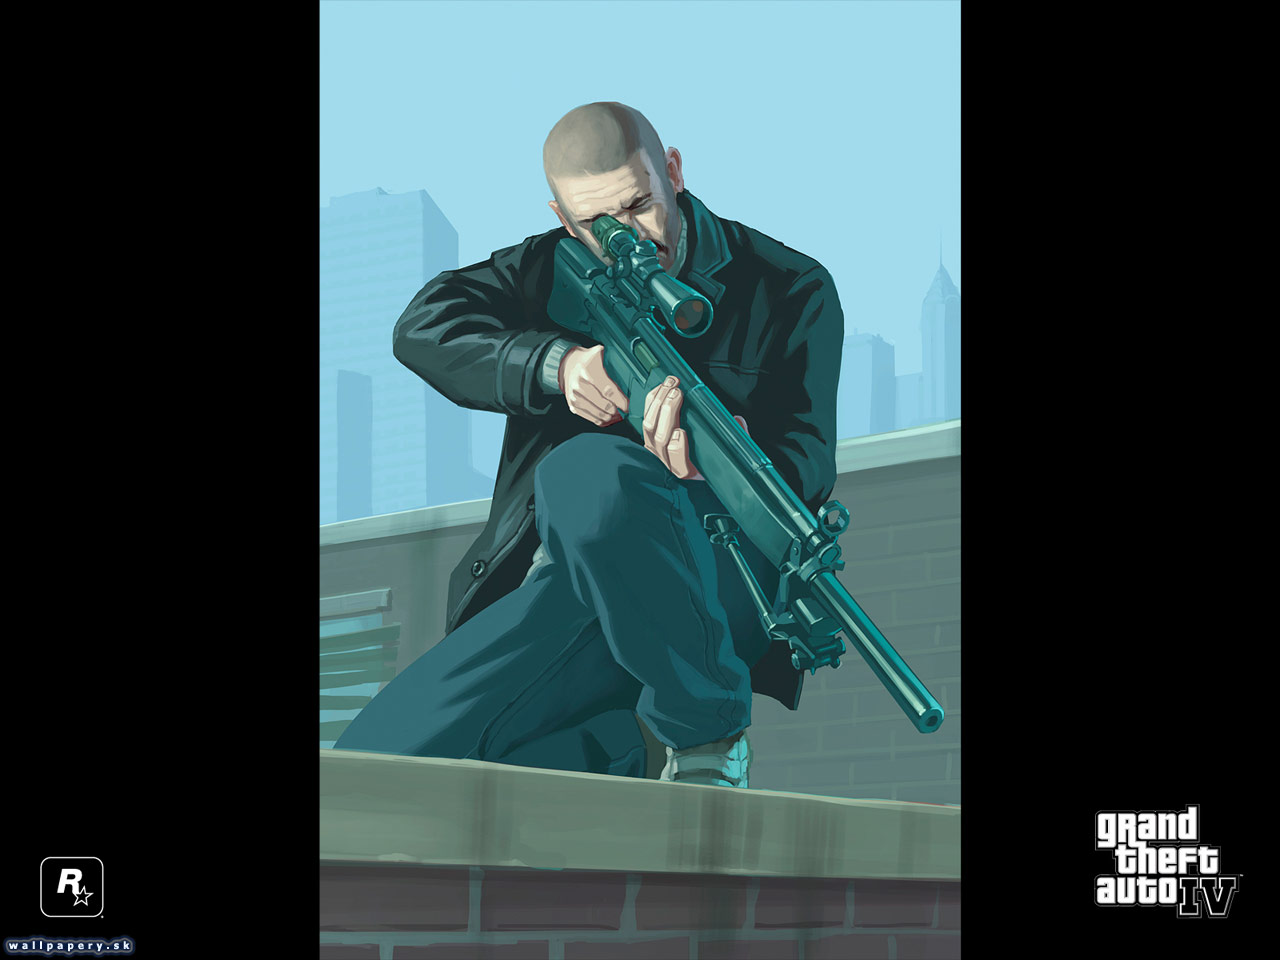 Grand Theft Auto IV - wallpaper 6